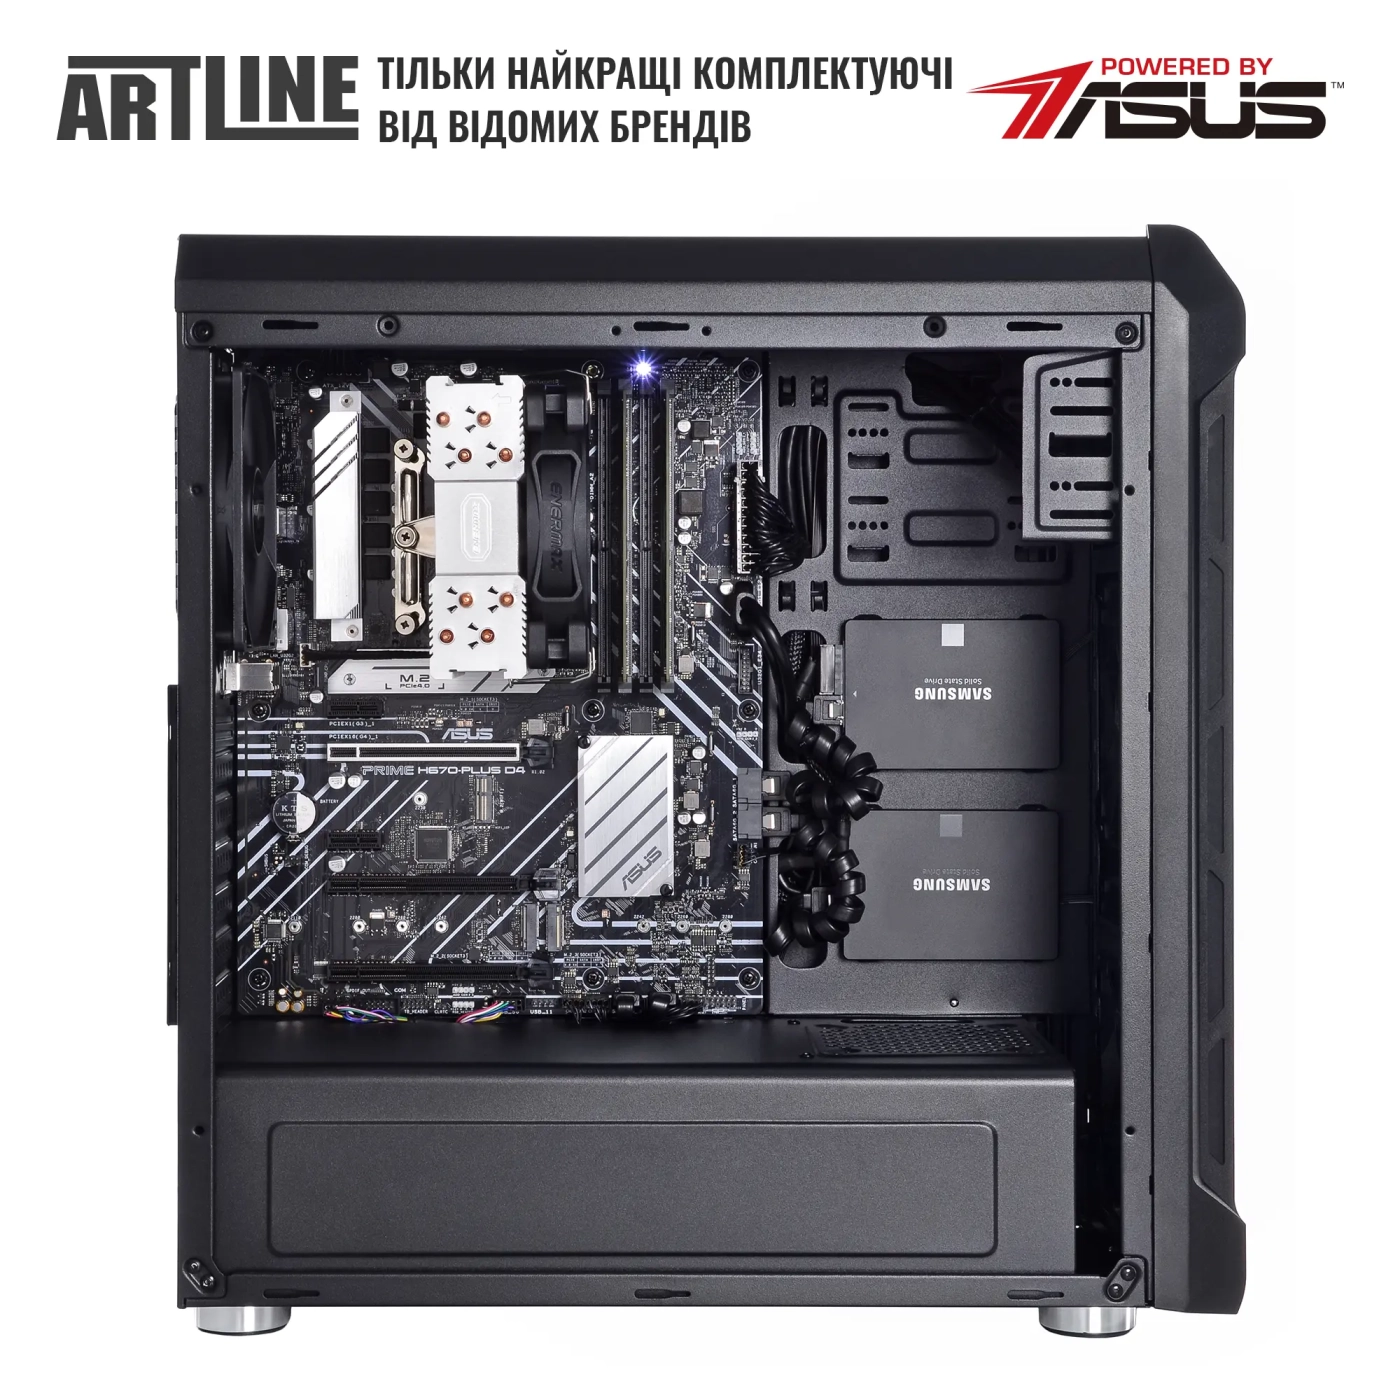 Купити Сервер ARTLINE Business T27 (T27v35) - фото 4